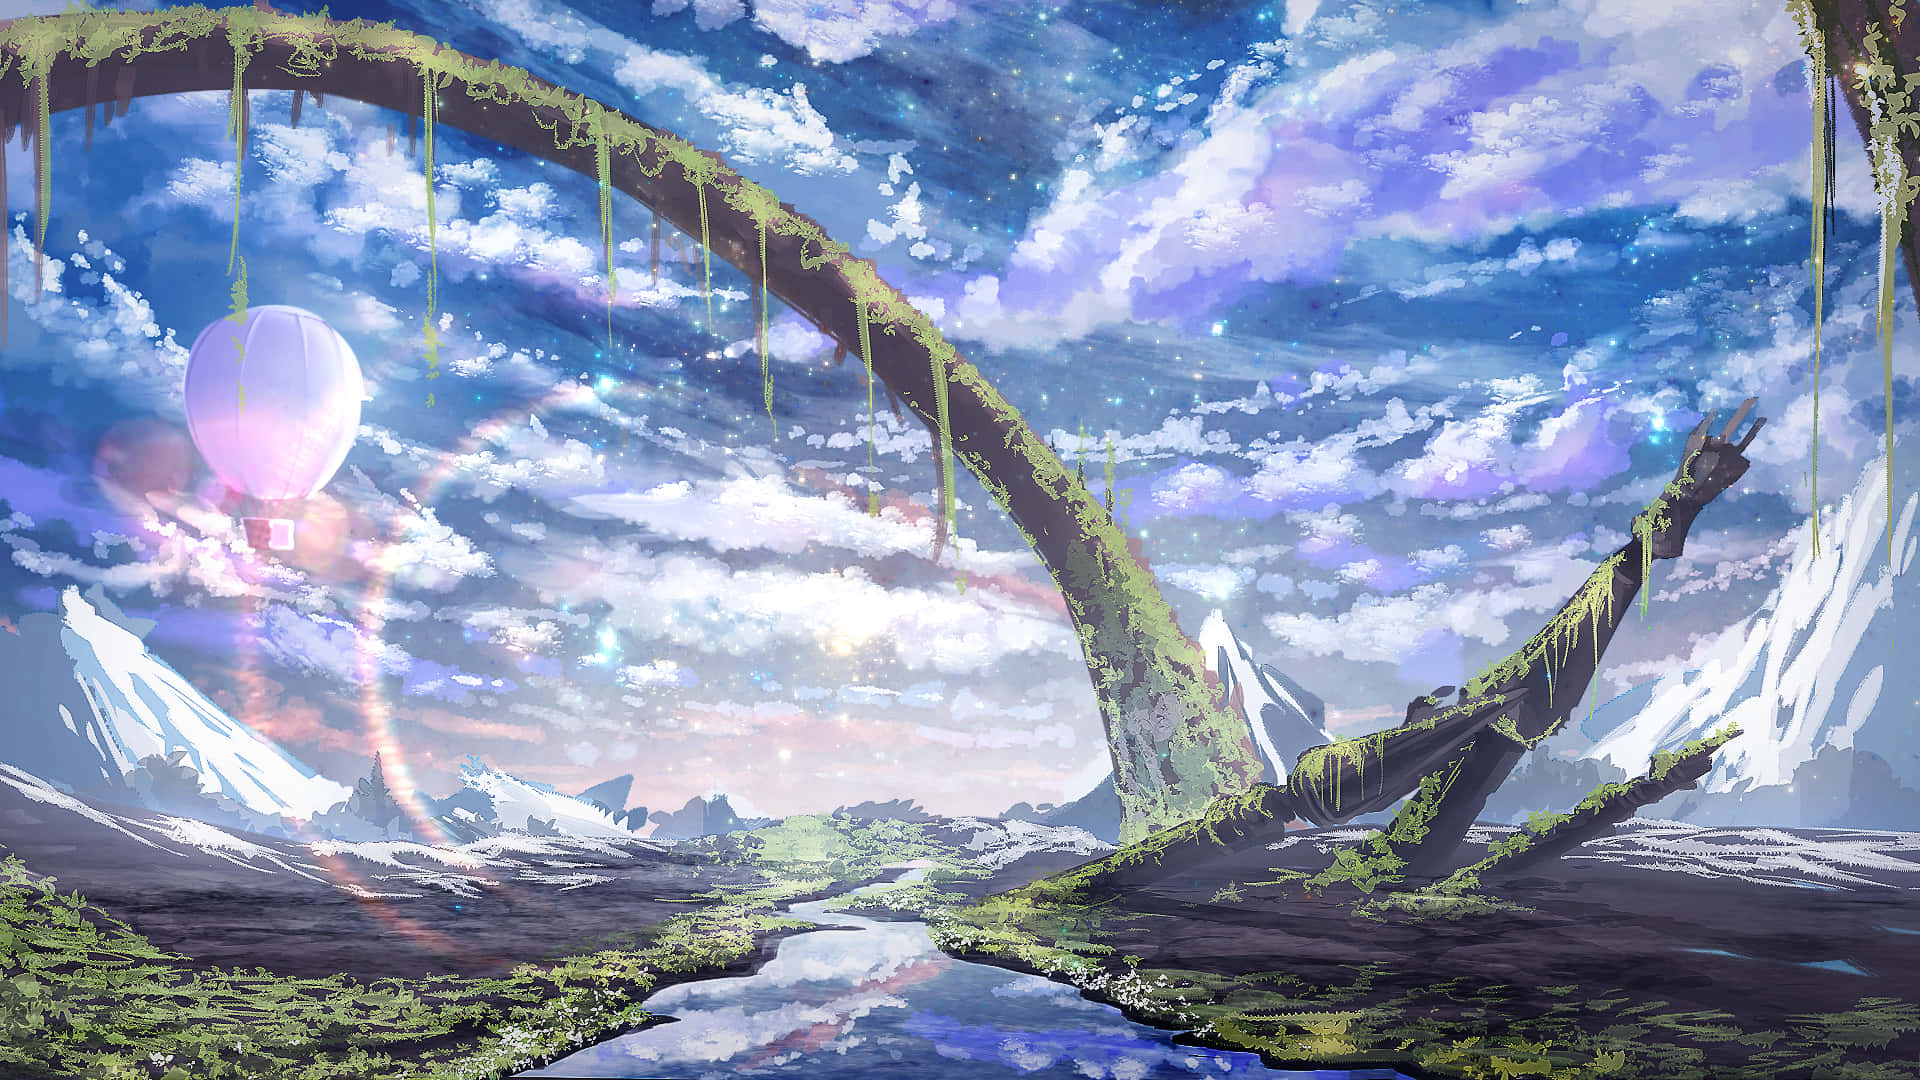 Explore the vibrant Anime Landscape